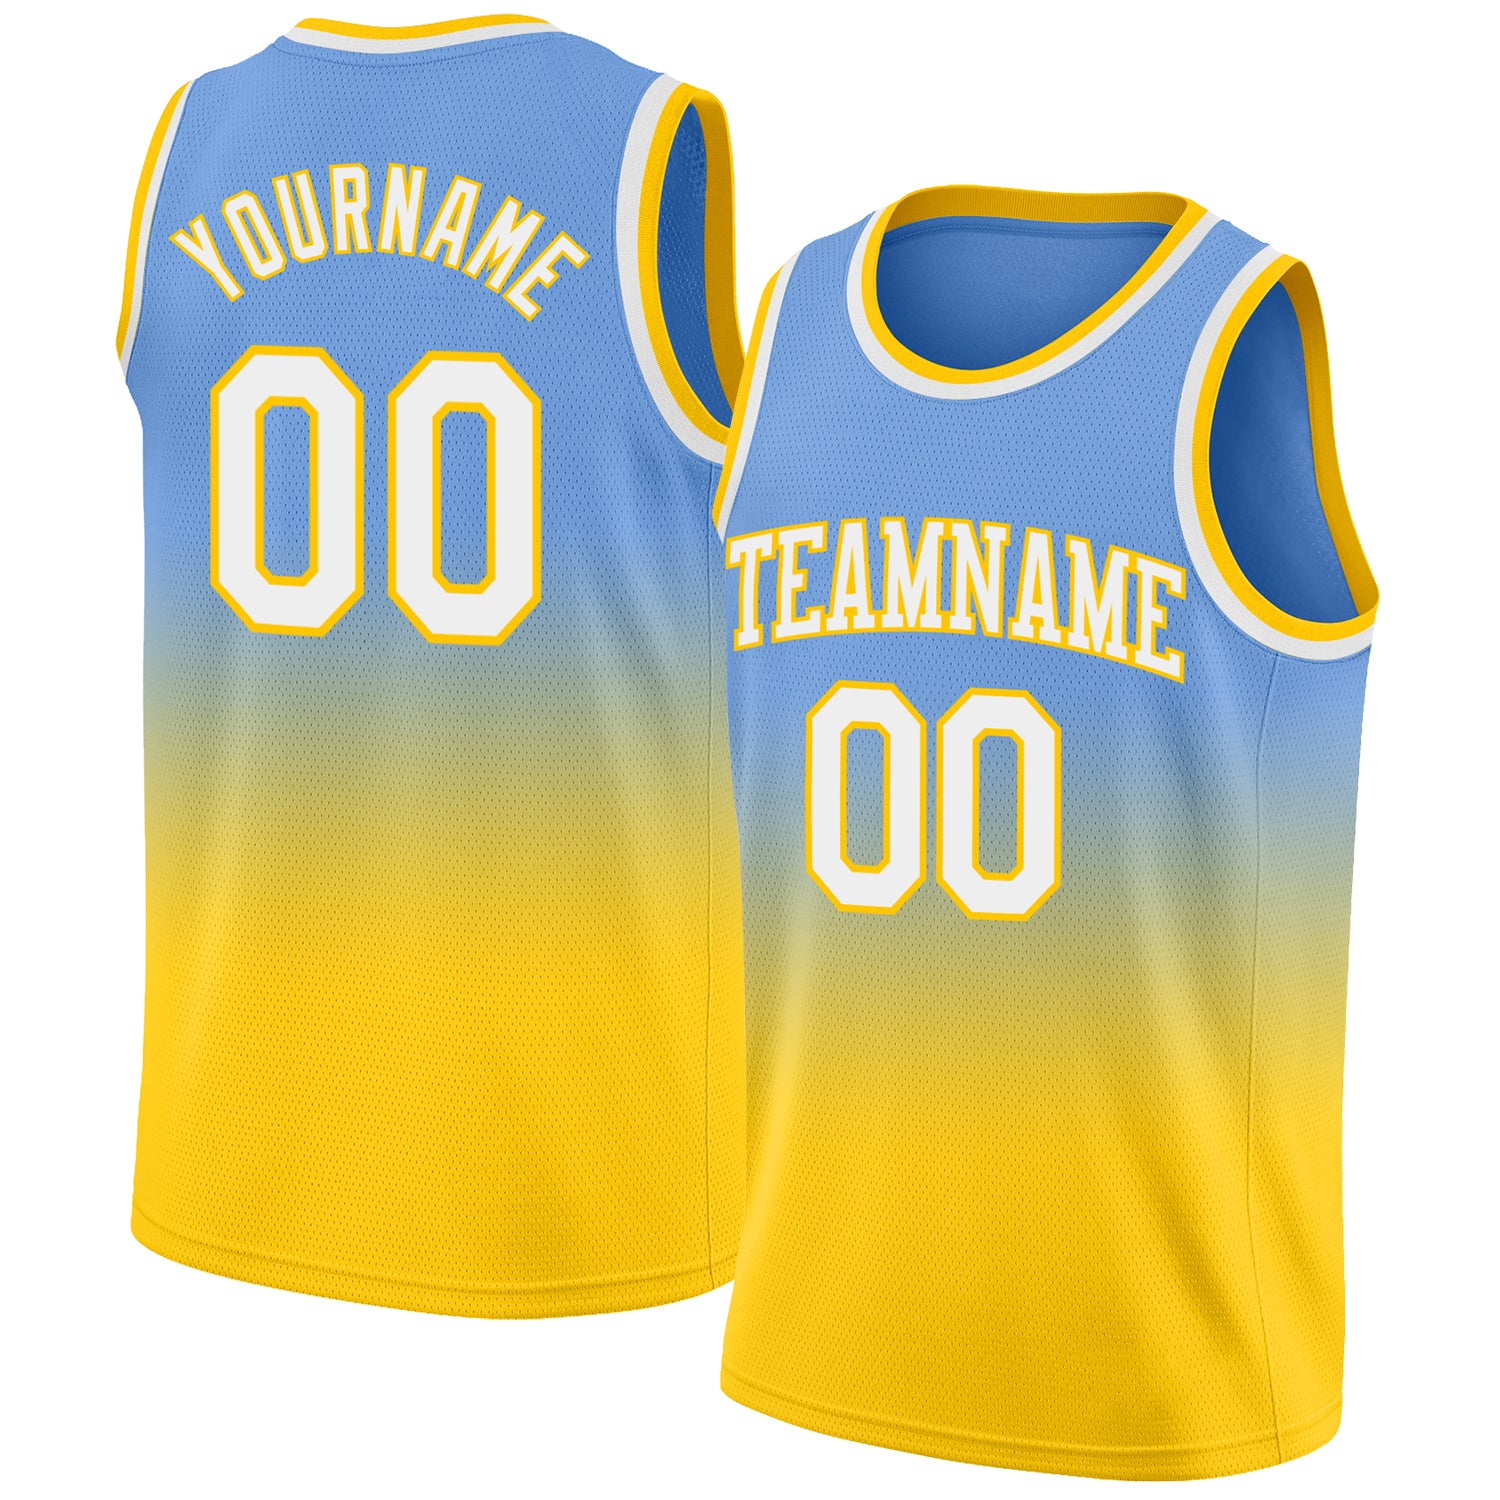 Golden State Warriors City  Basketball jersey outfit, Sports jersey design,  Basketball uniforms design